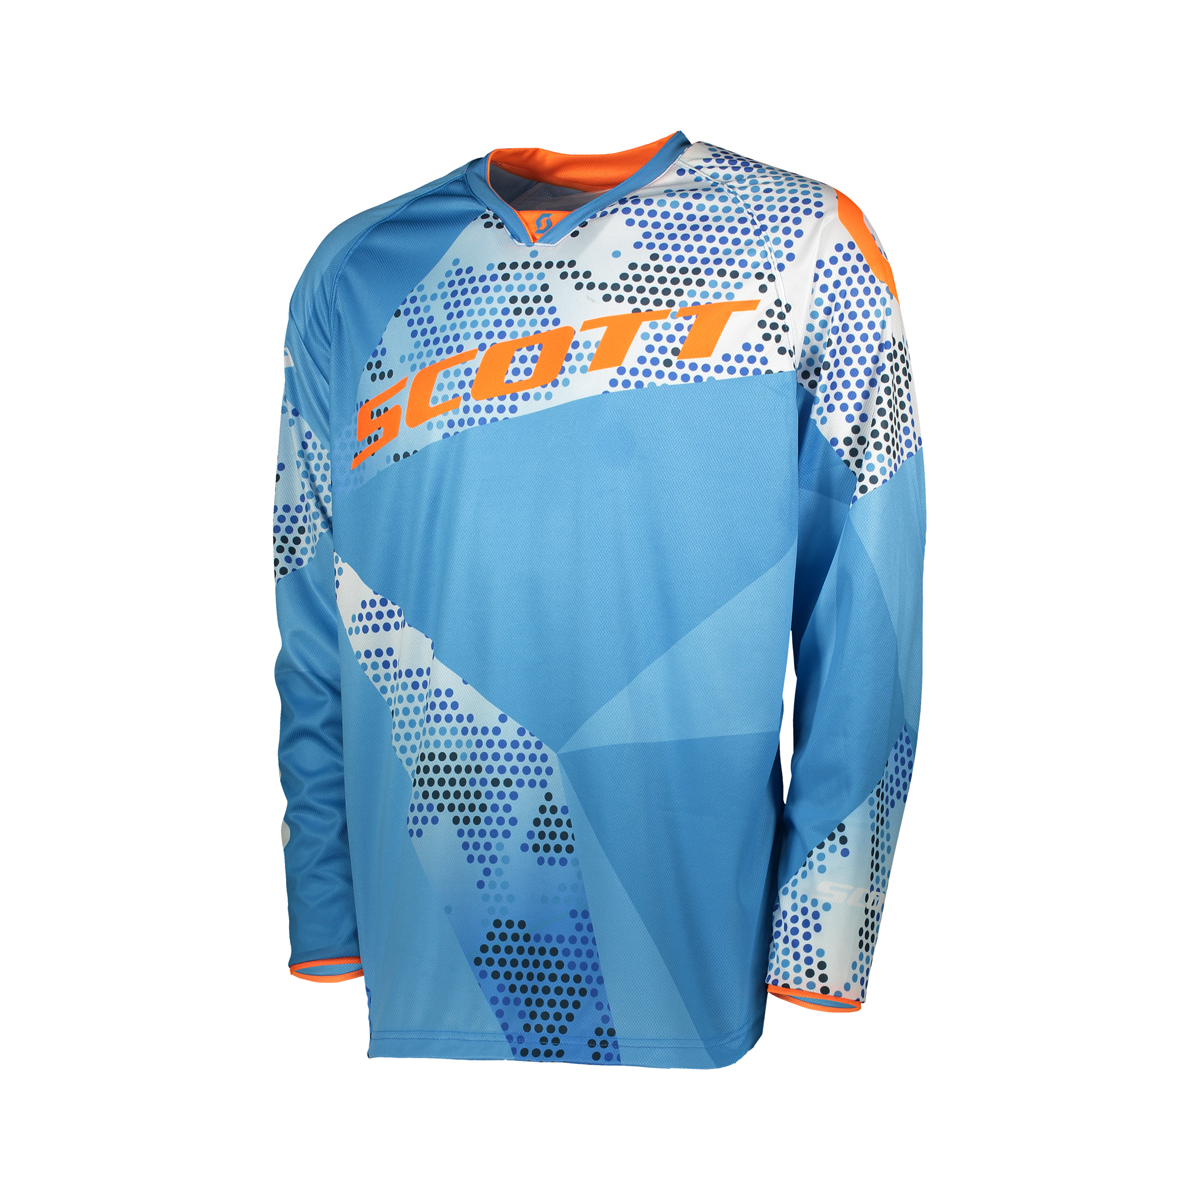 Scott Enduro MX Motocross DH Fahrrad Hose blau/orange 2018 